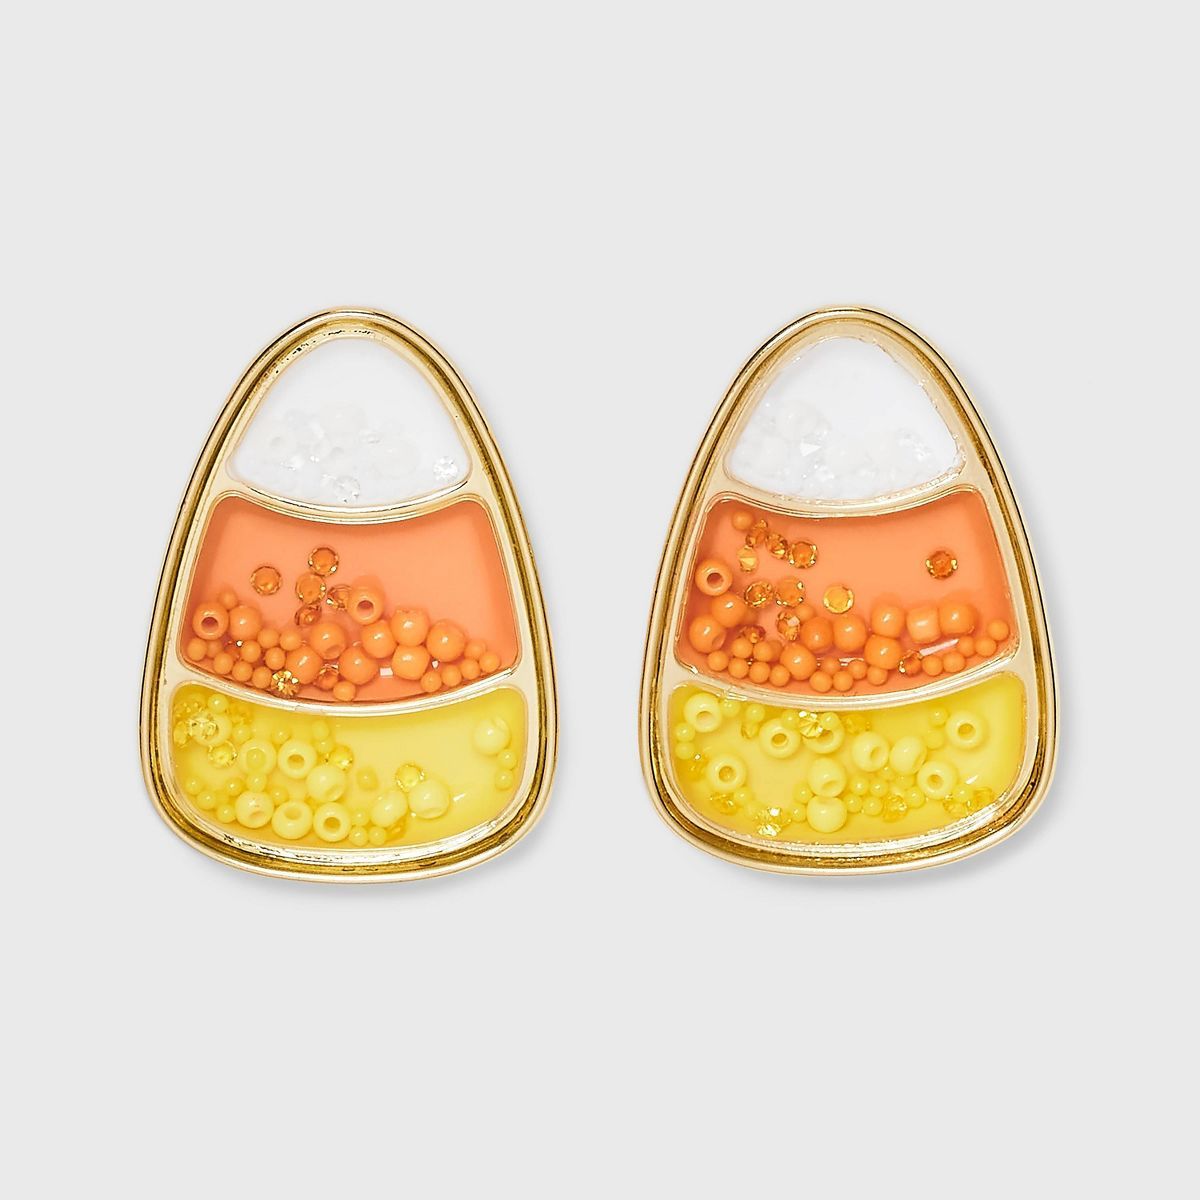 SUGARFIX by BaubleBar "A Little Corny" Stud Earrings - Orange | Target